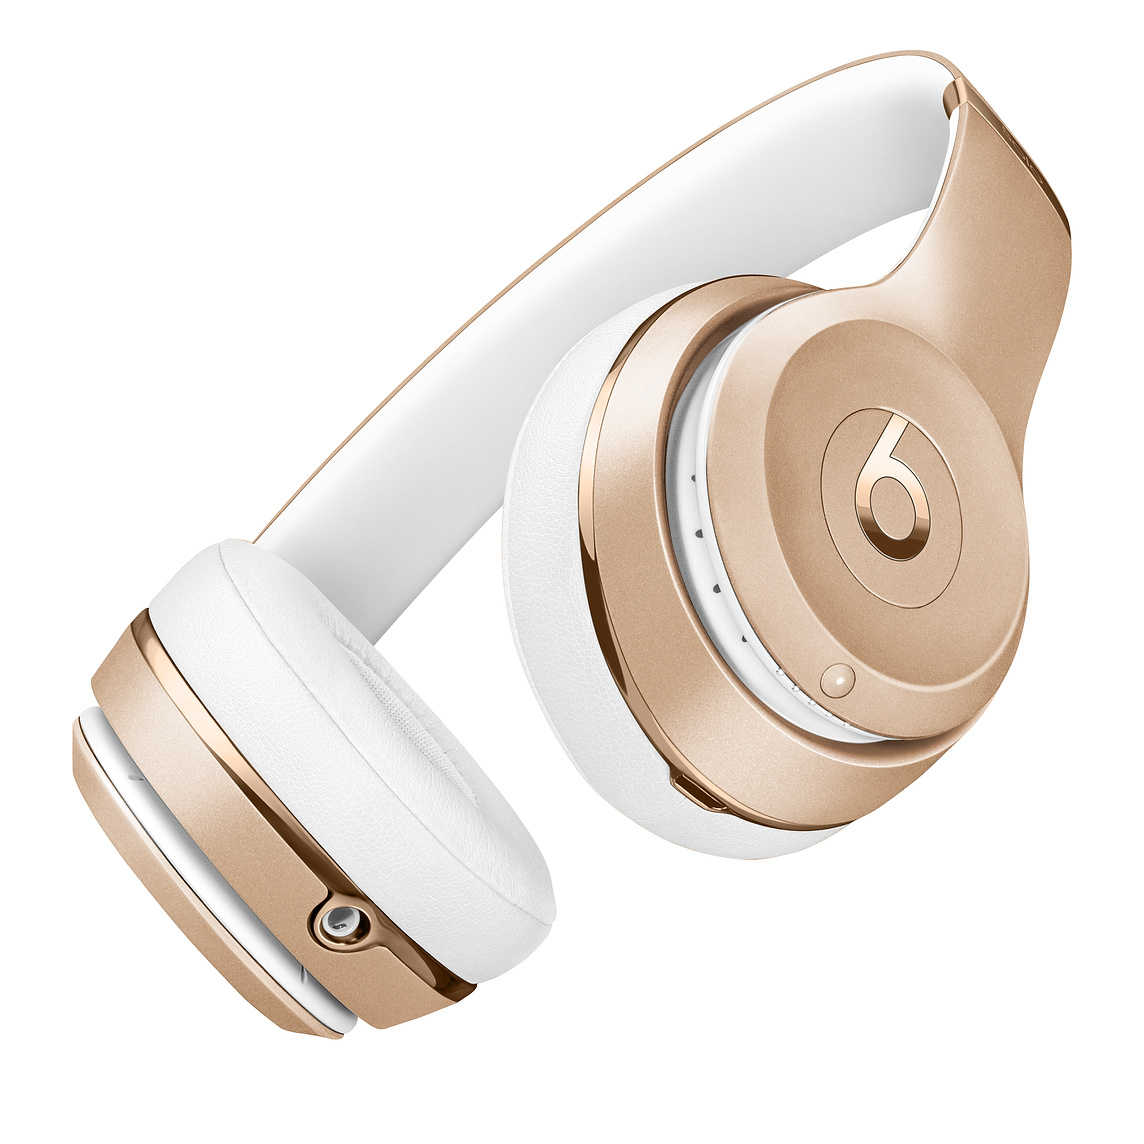 【Beats】Solo3 Wireless 金色 藍牙無線耳罩式耳機 ★ 免運 ★